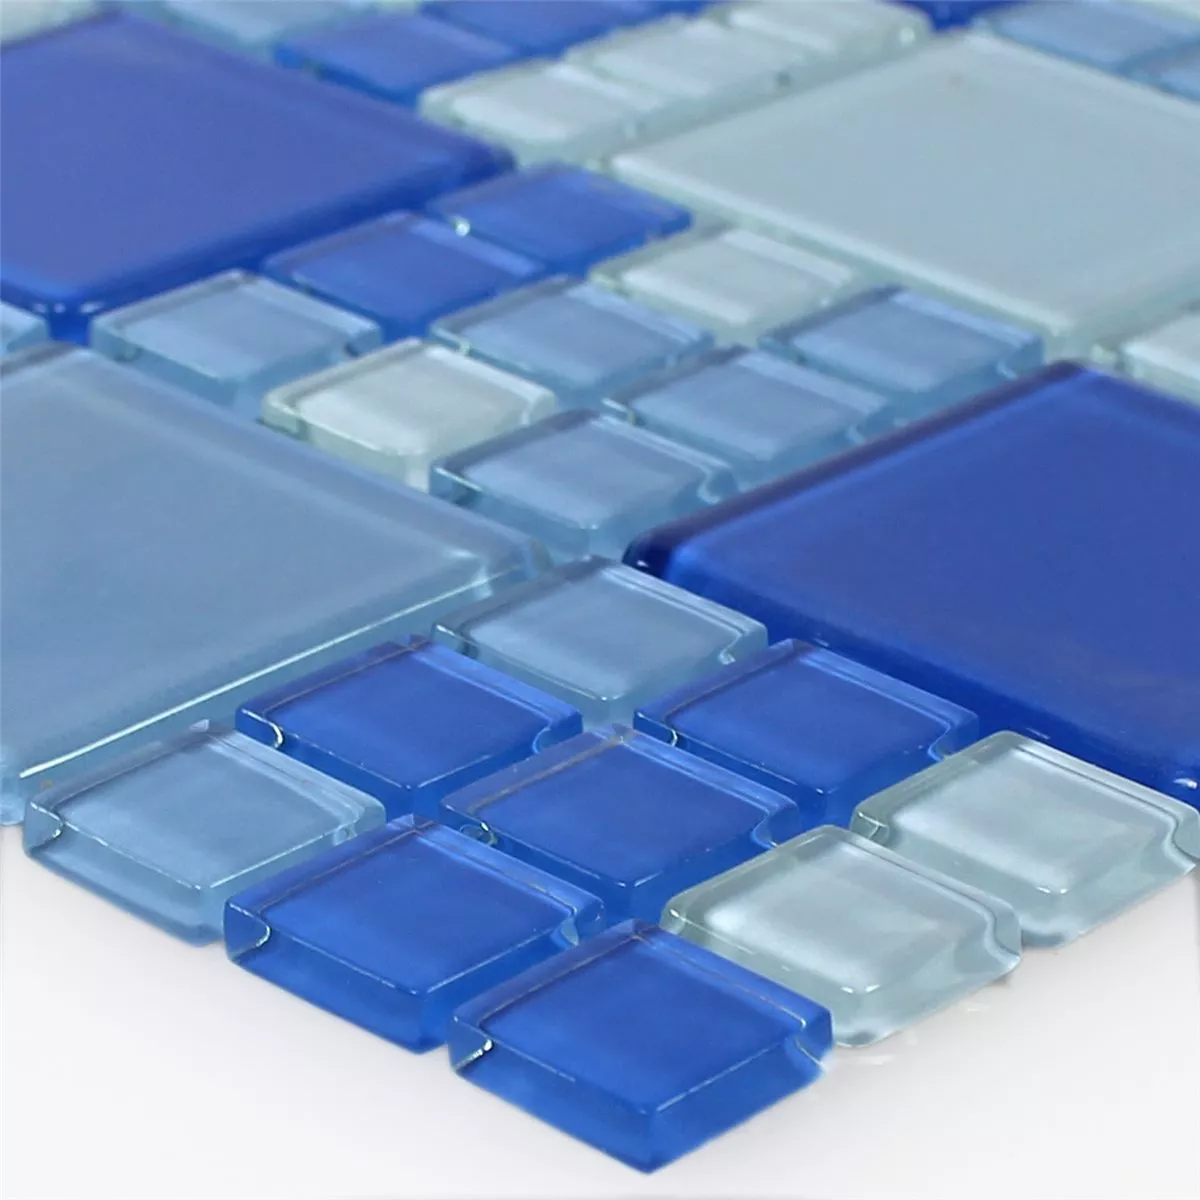 Stakleni Mozaik Pločice Plava Svjetloplava Mix